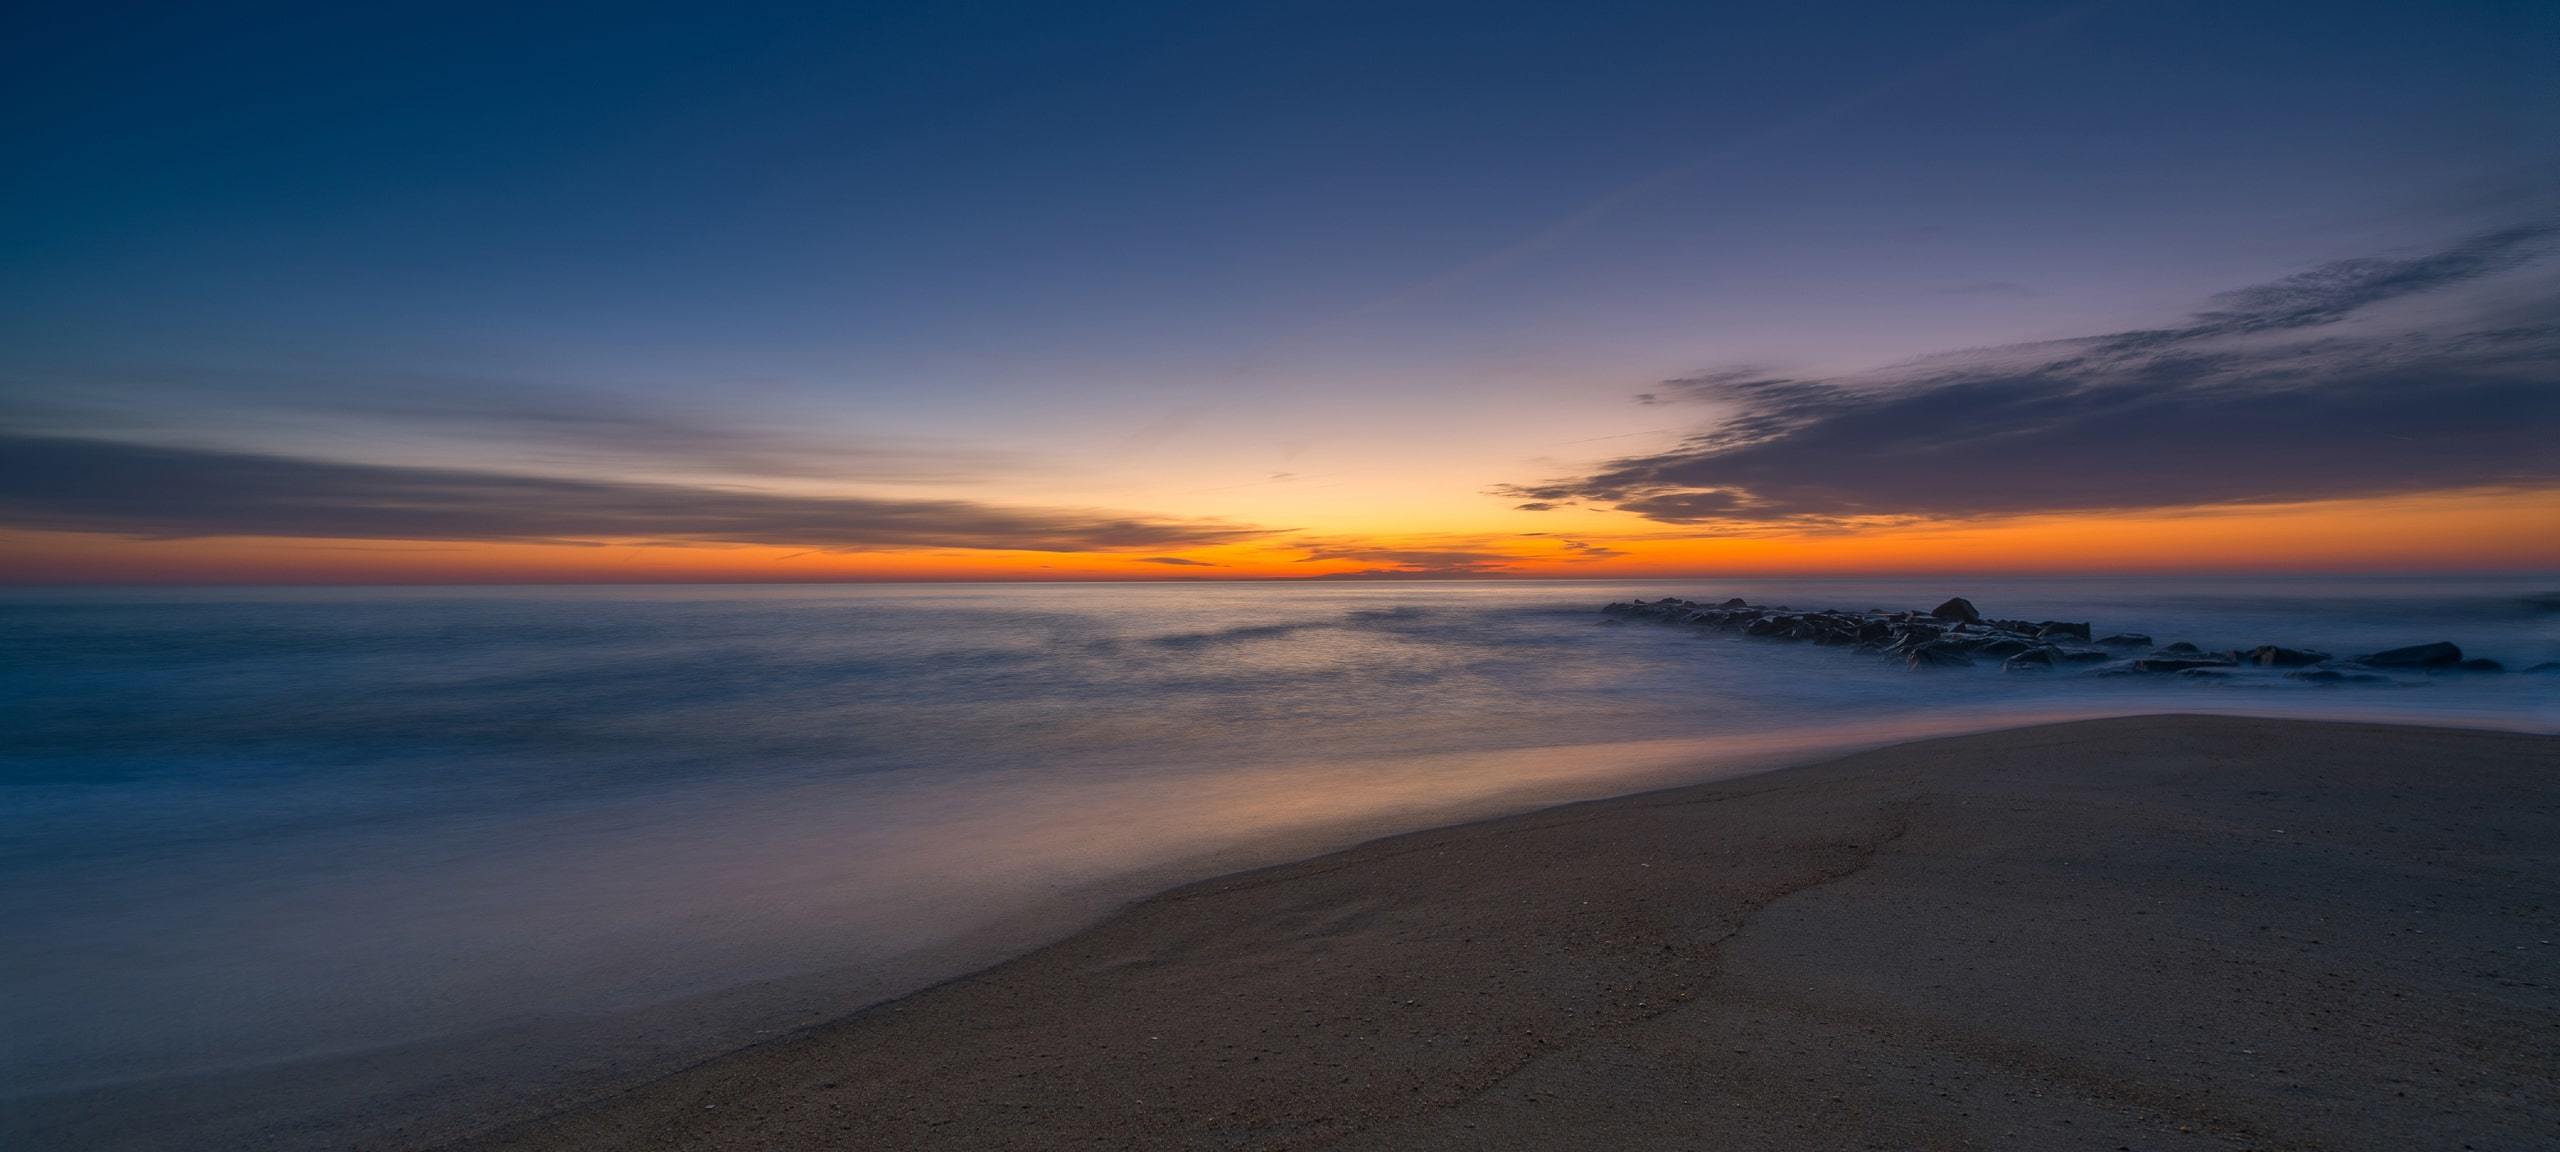 Sunrise over Jersey Shore beach